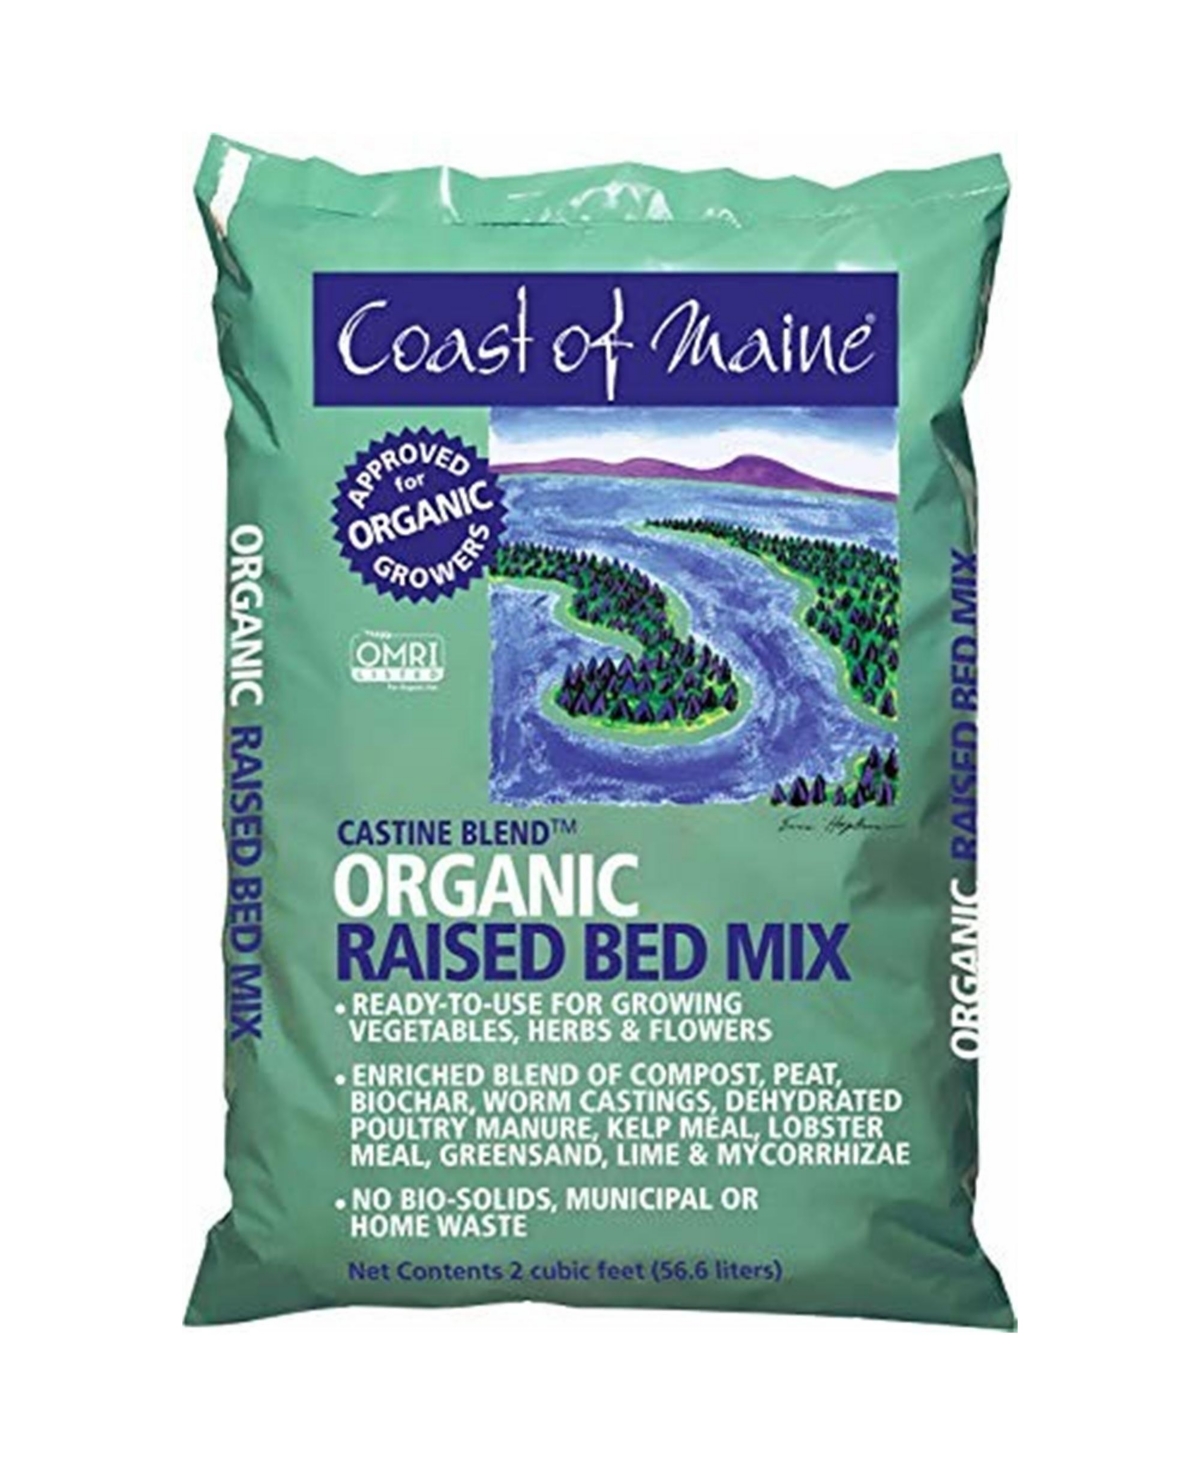 Castine Blend, Organic Raised Bed Mix, 2 cu ft - Multi